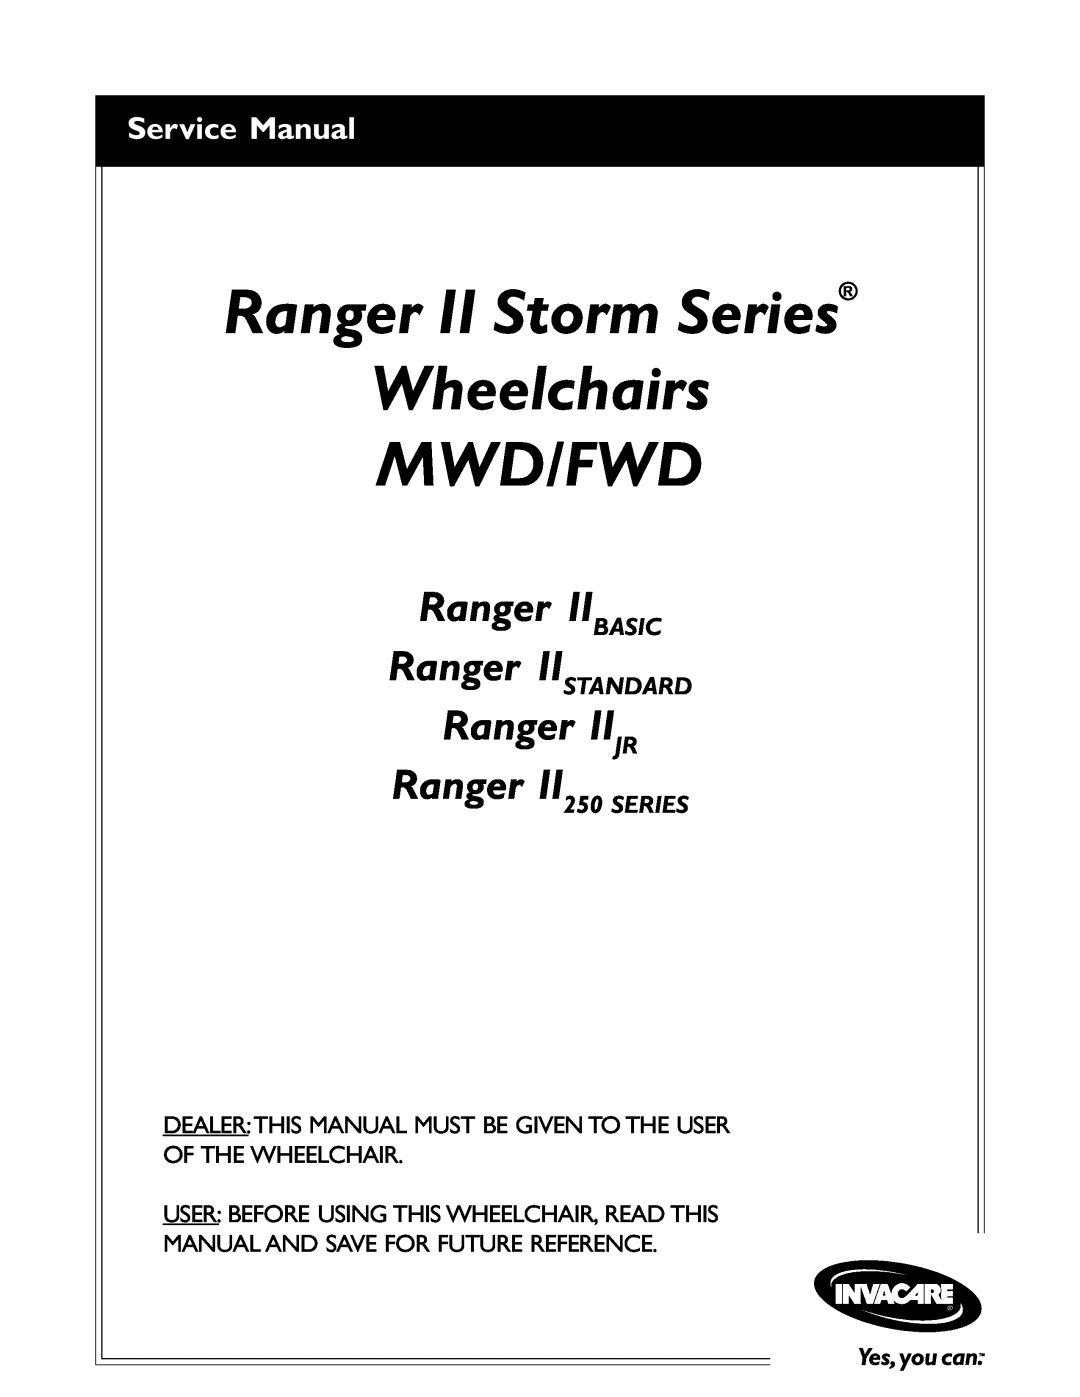 Invacare Ranger IISTANDARD service manual Ranger II Storm Series Wheelchairs MWD/FWD, Service Manual, Ranger II250 SERIES 